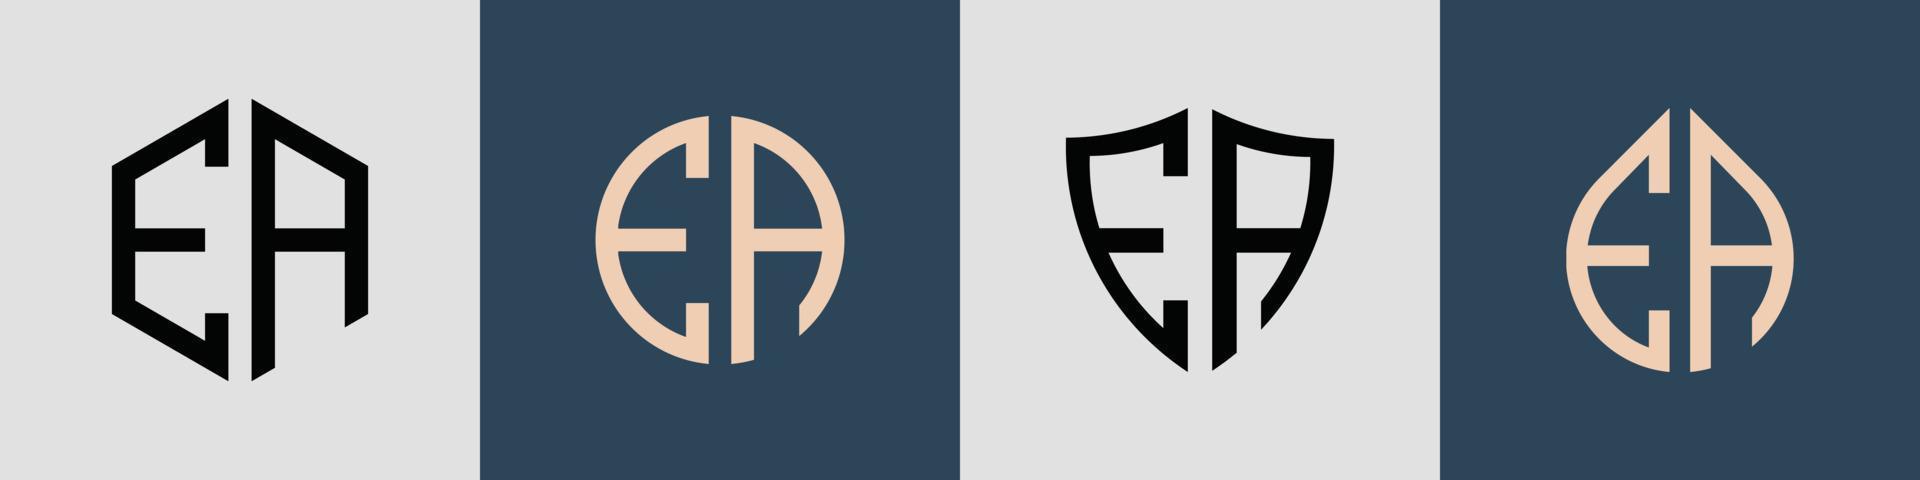 Creative simple Initial Letters EA Logo Designs Bundle. vector